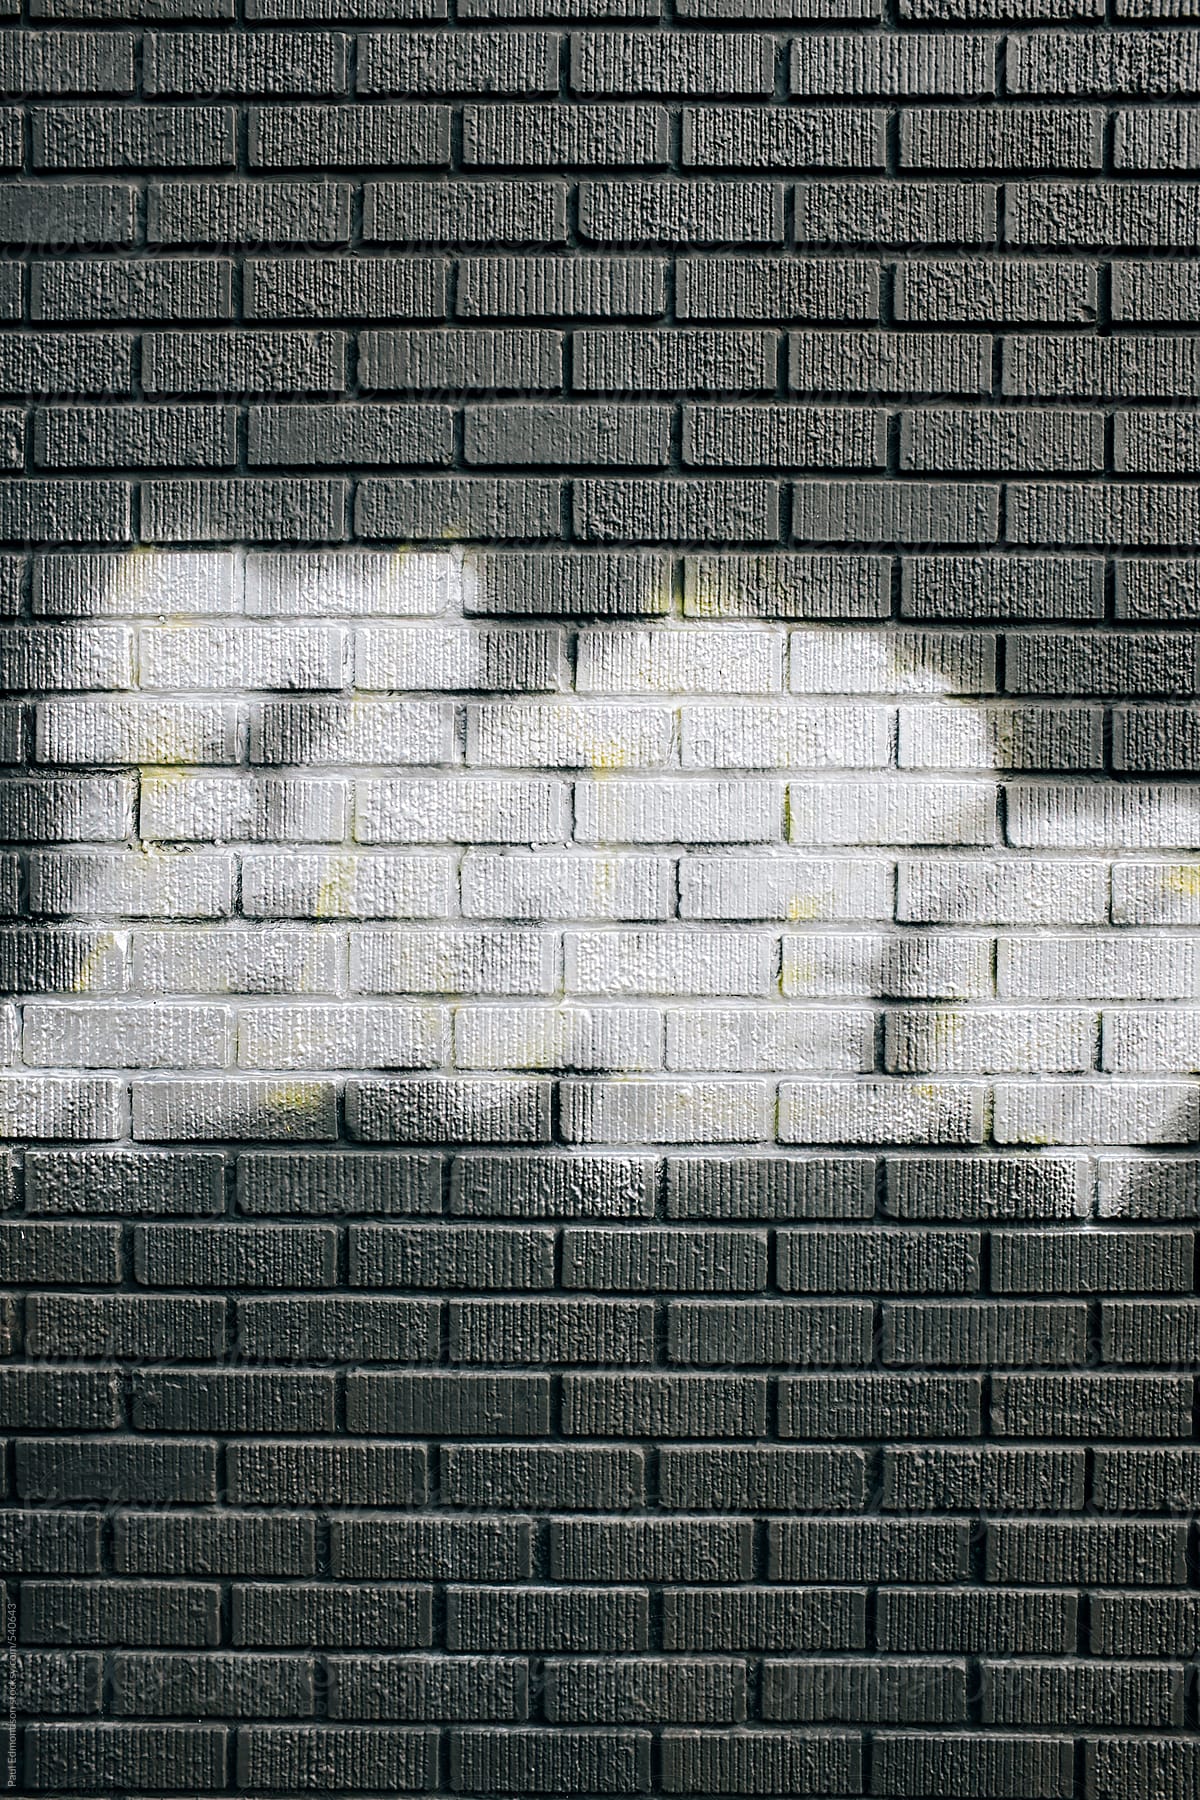 Metallic silver spray paint covering graffiti tags on brick wall